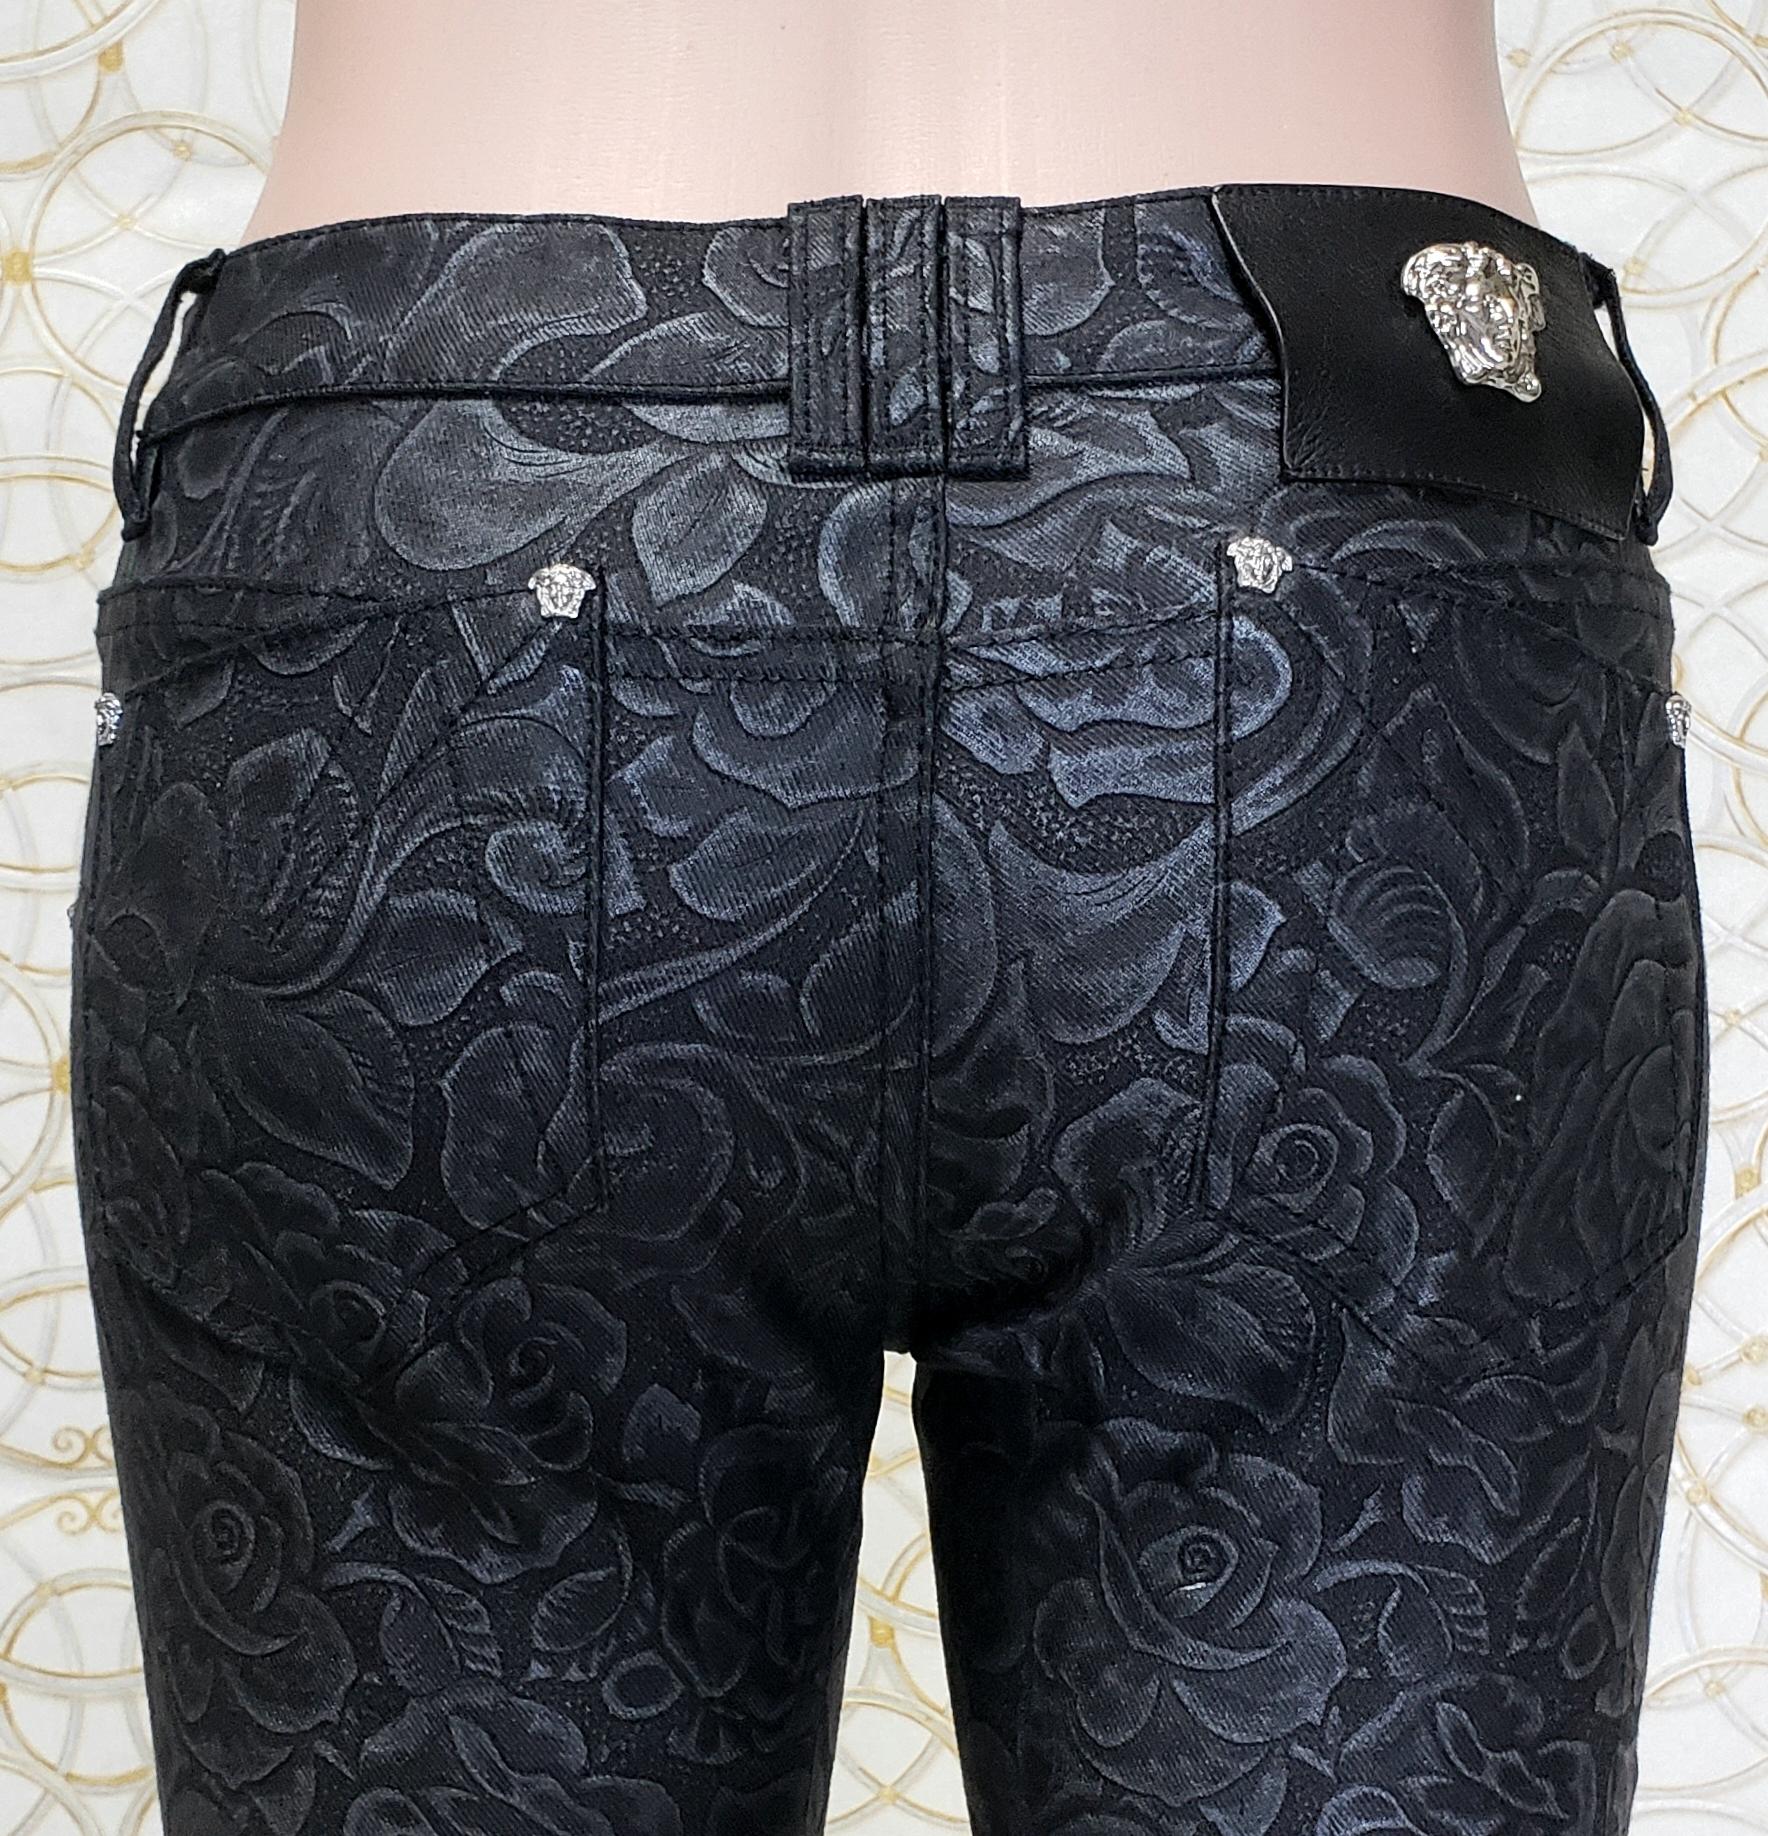 Women's S/S 2014 Look # 5 VERSACE BLACK FLORAL JEANS PANTS size 26 For Sale